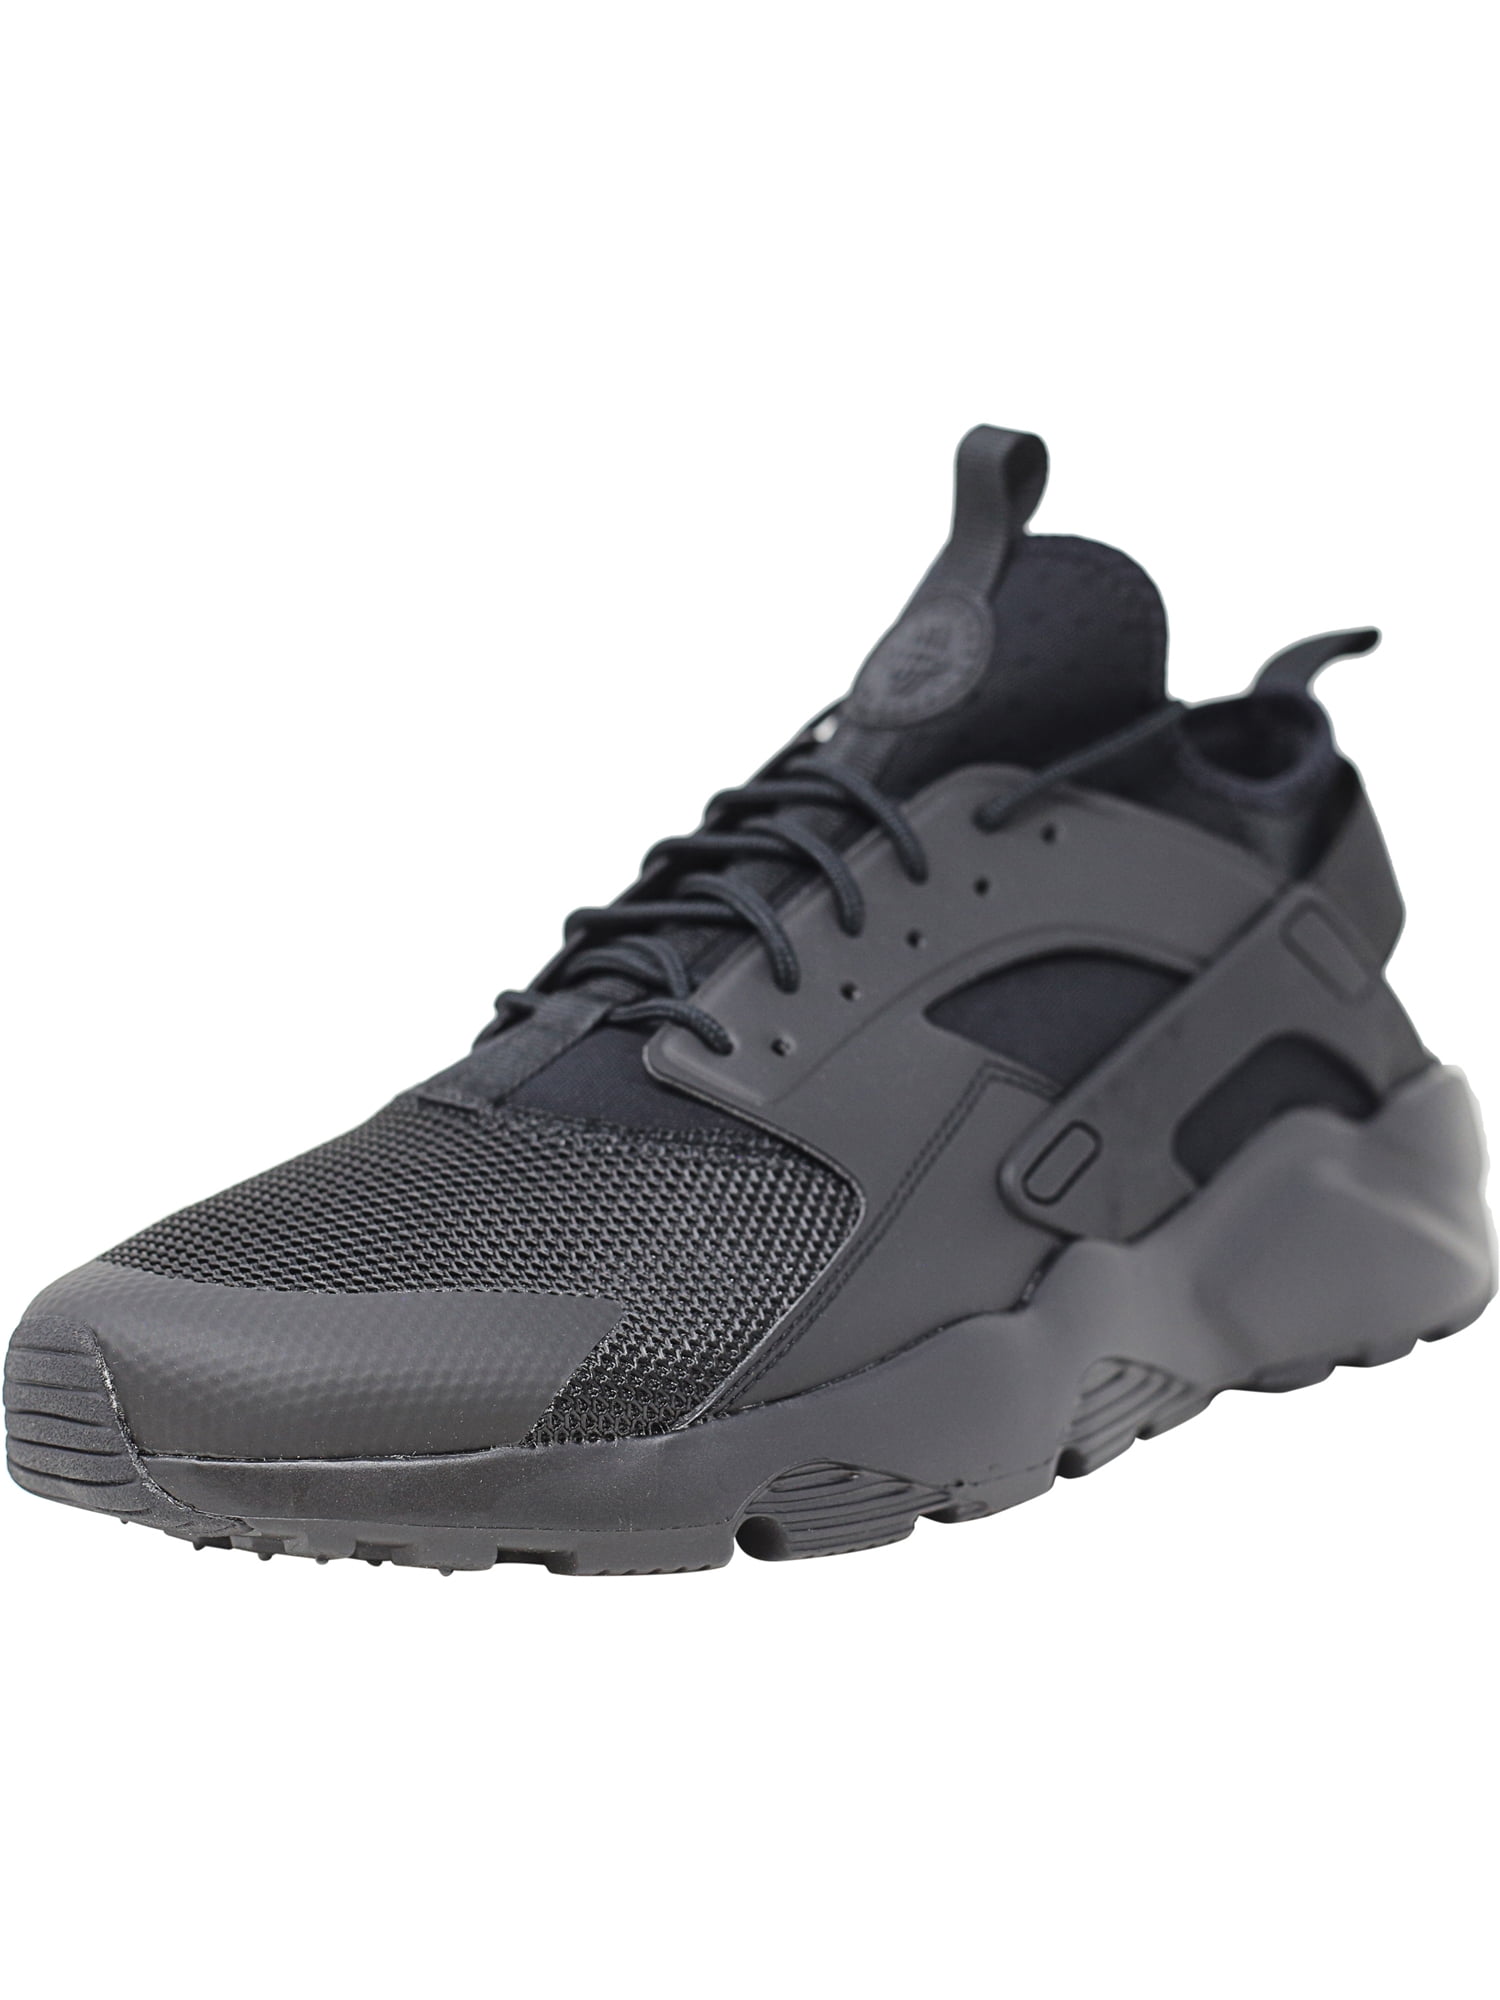 Nike Air Huarache Black / - Ankle-High Mesh Running Shoe 6M - Walmart.com